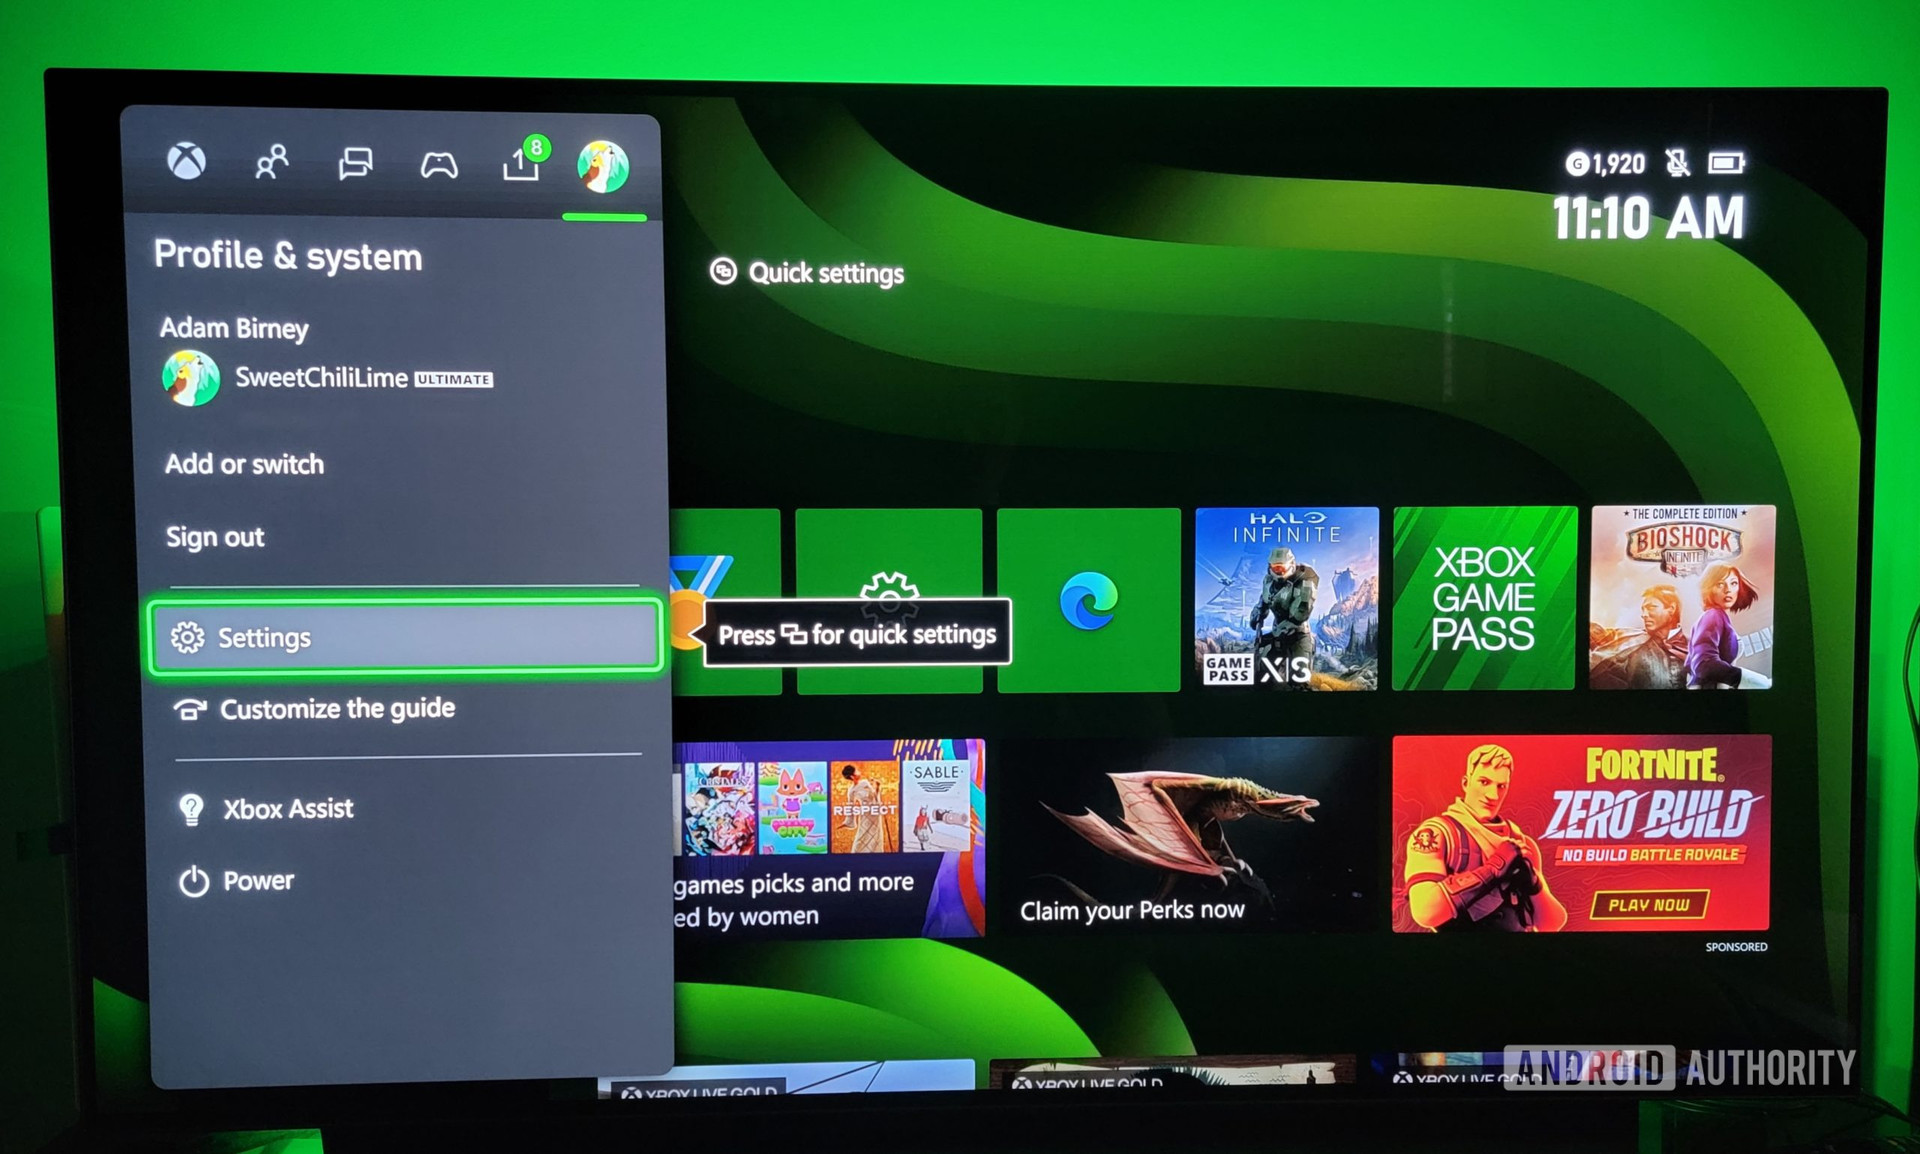 Xbox settings